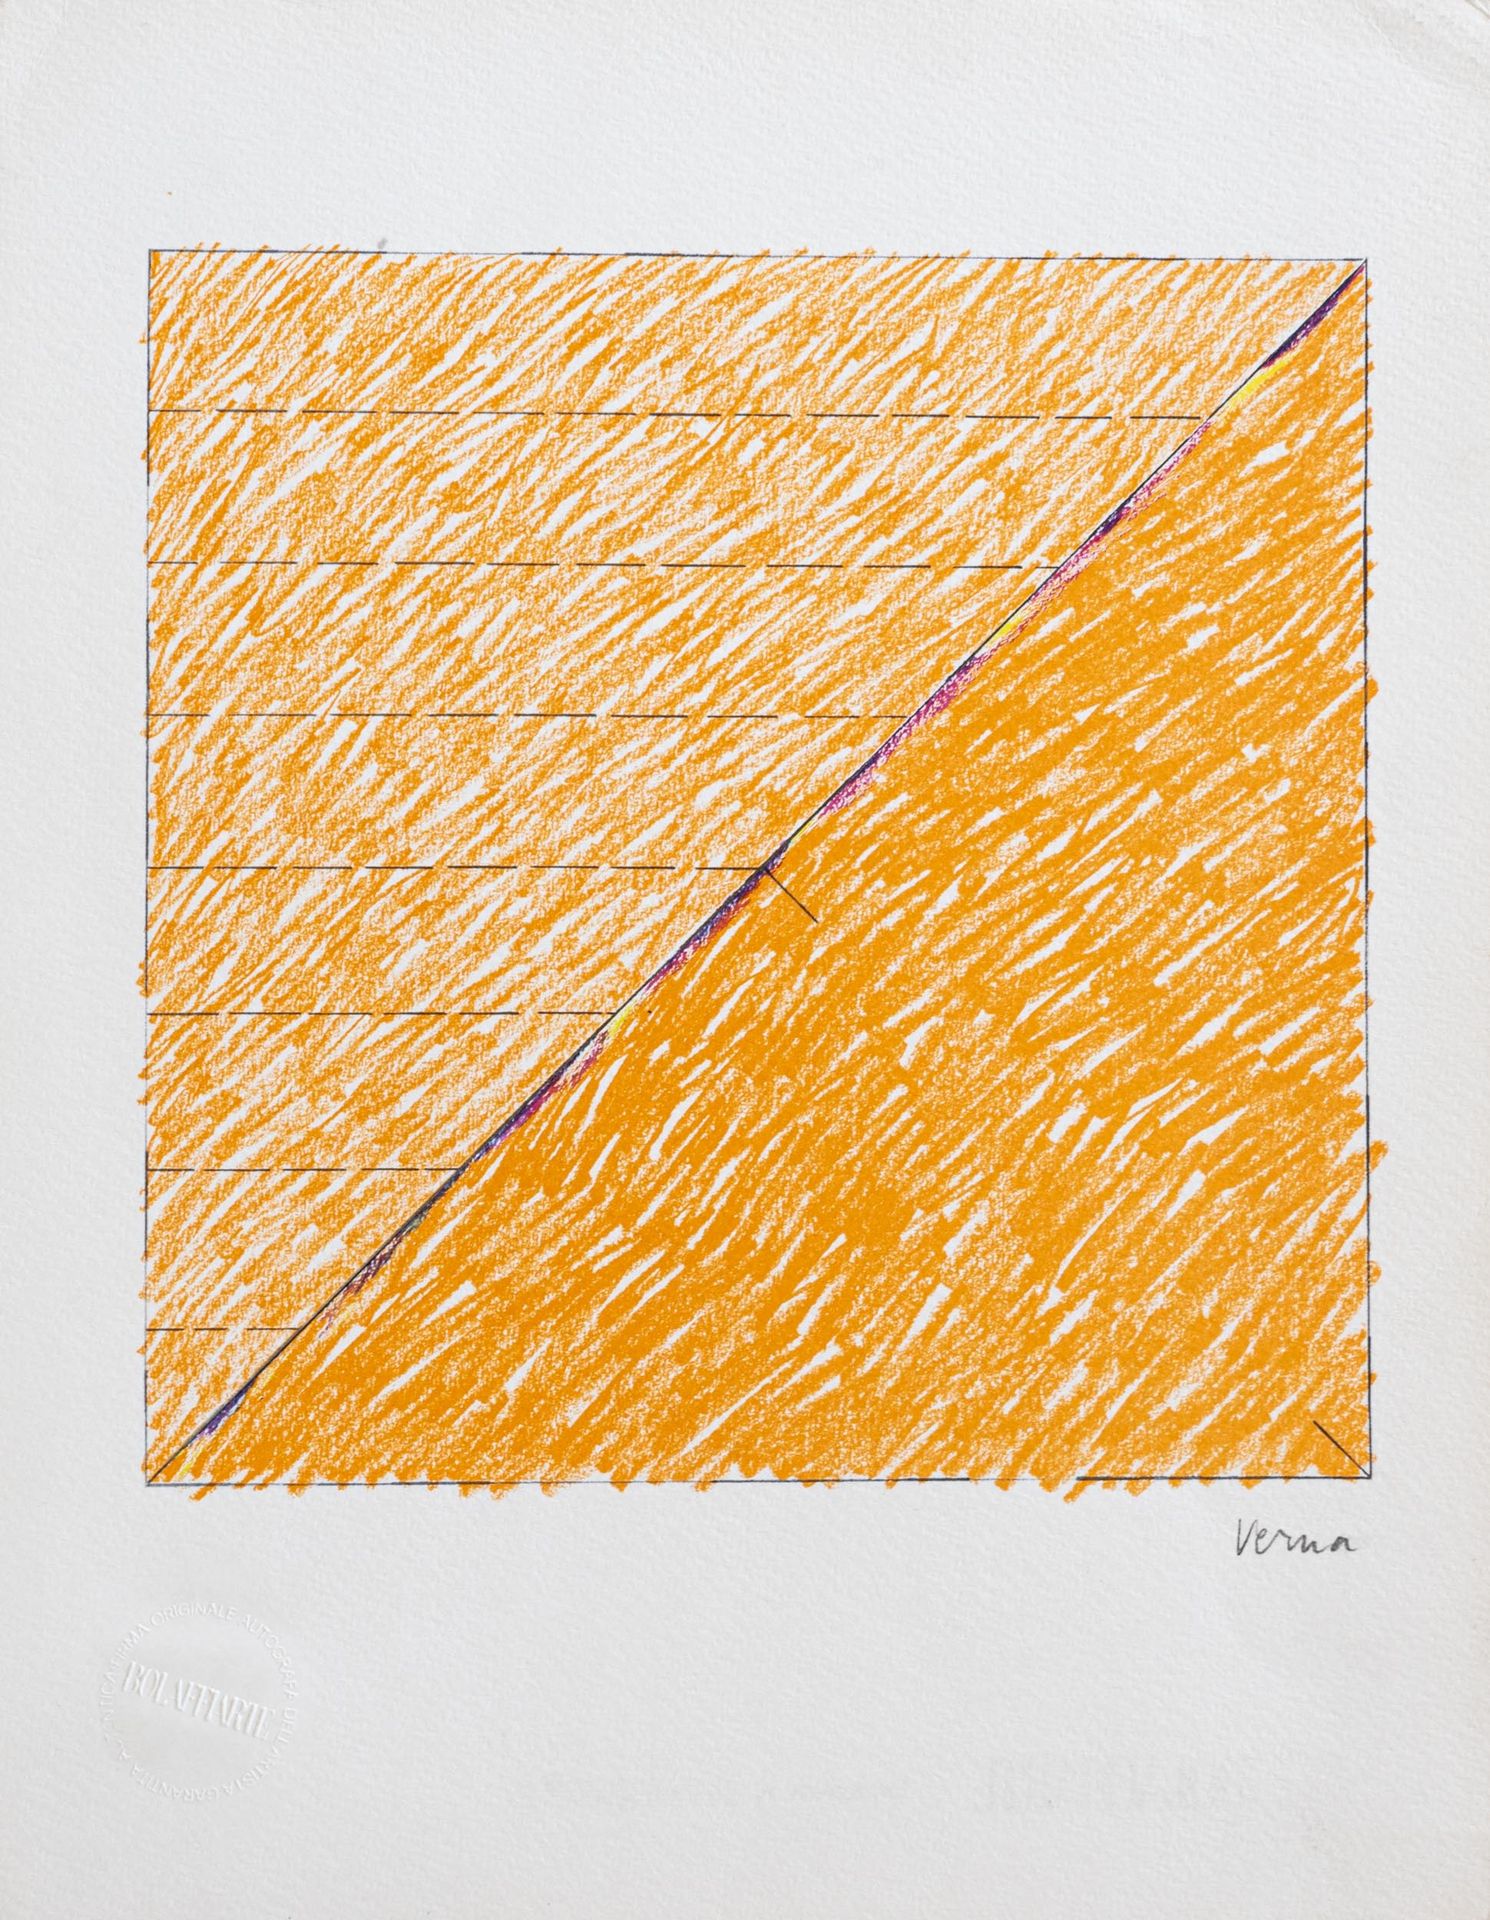 CLAUDIO VERNA (Guardiagrele 1937) 为《博拉菲艺术》第37期绘制的蜡像图

光刻复制。第1950/5000号典范

cm 30,&hellip;